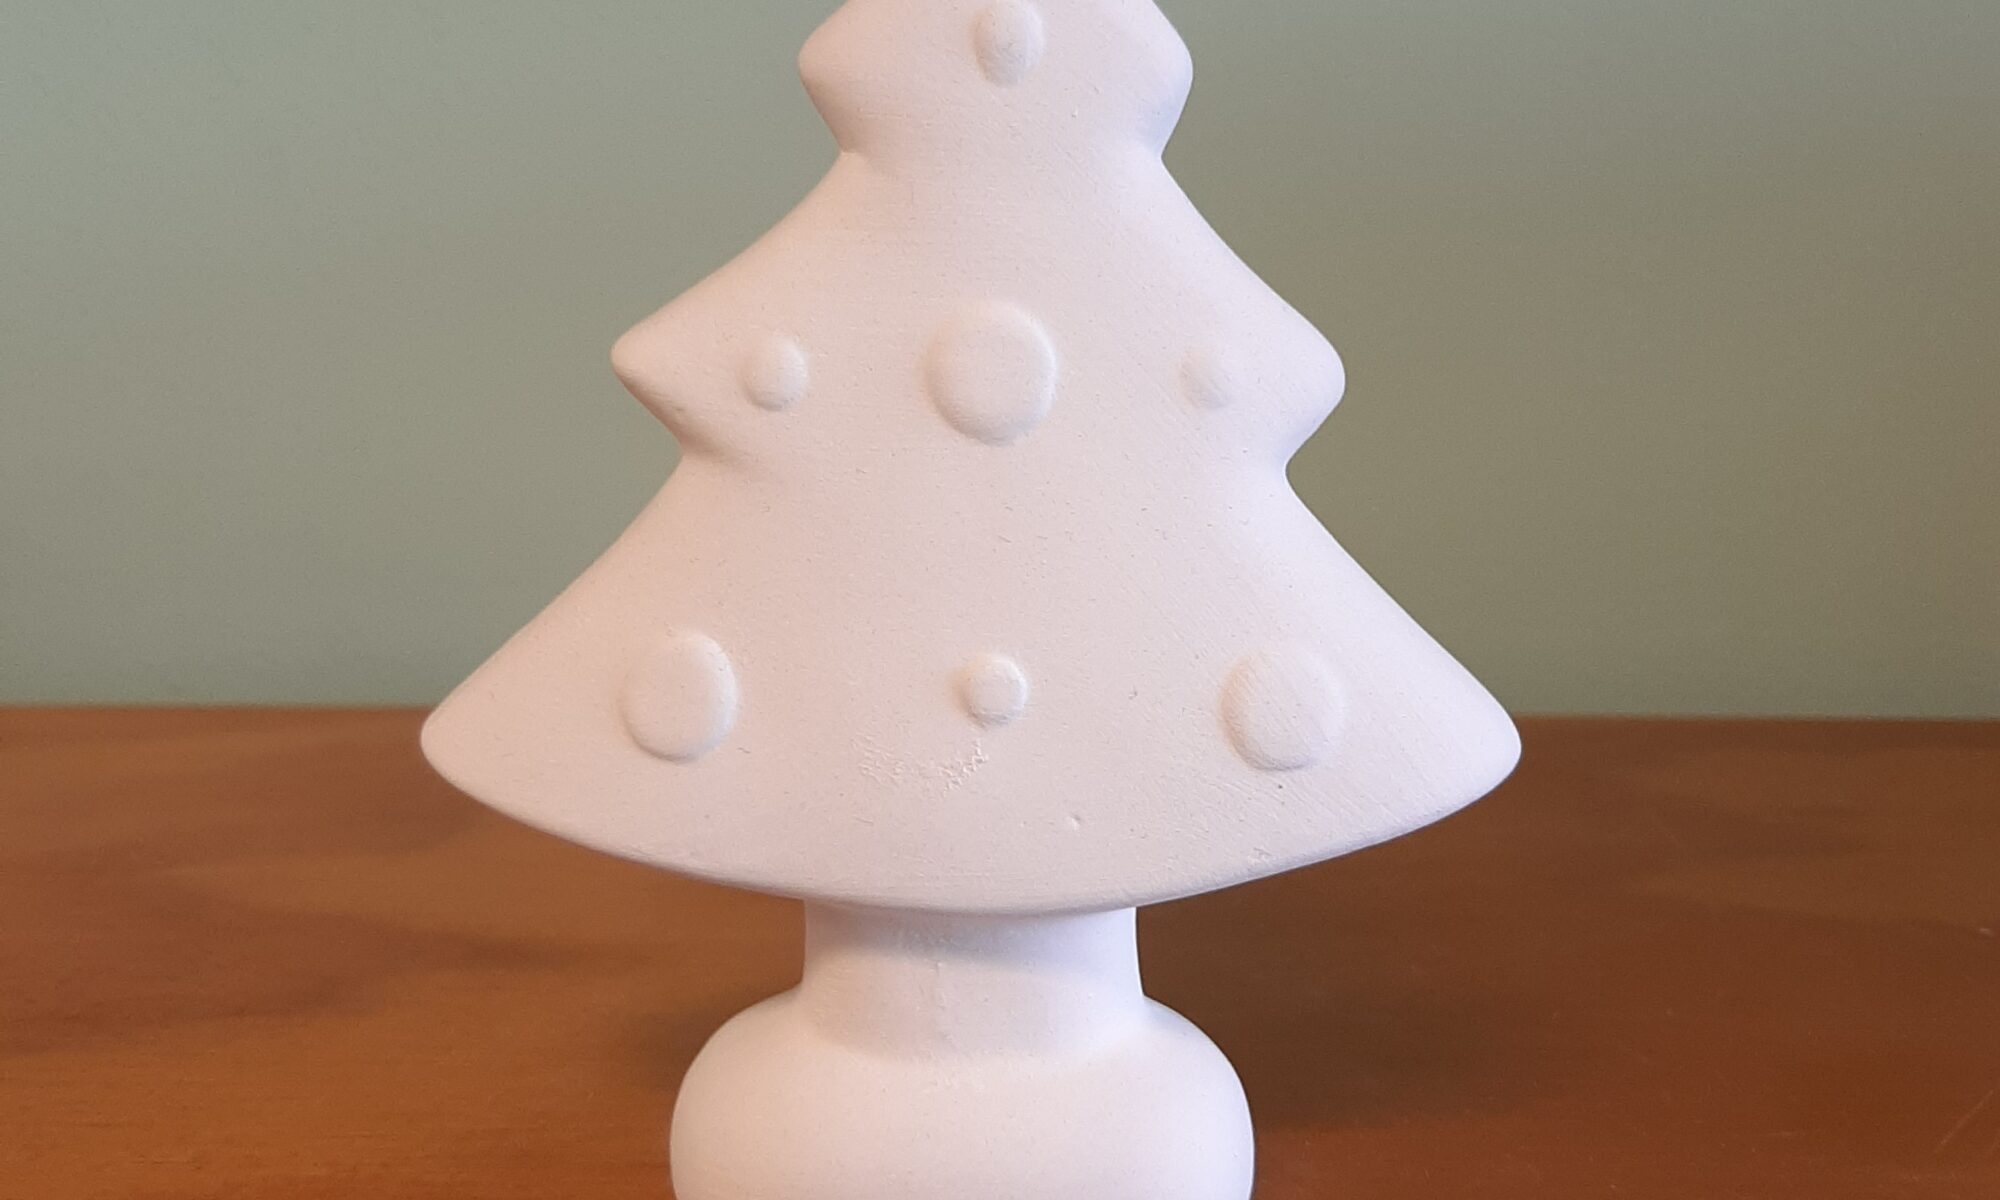 Christmas Tree Figure